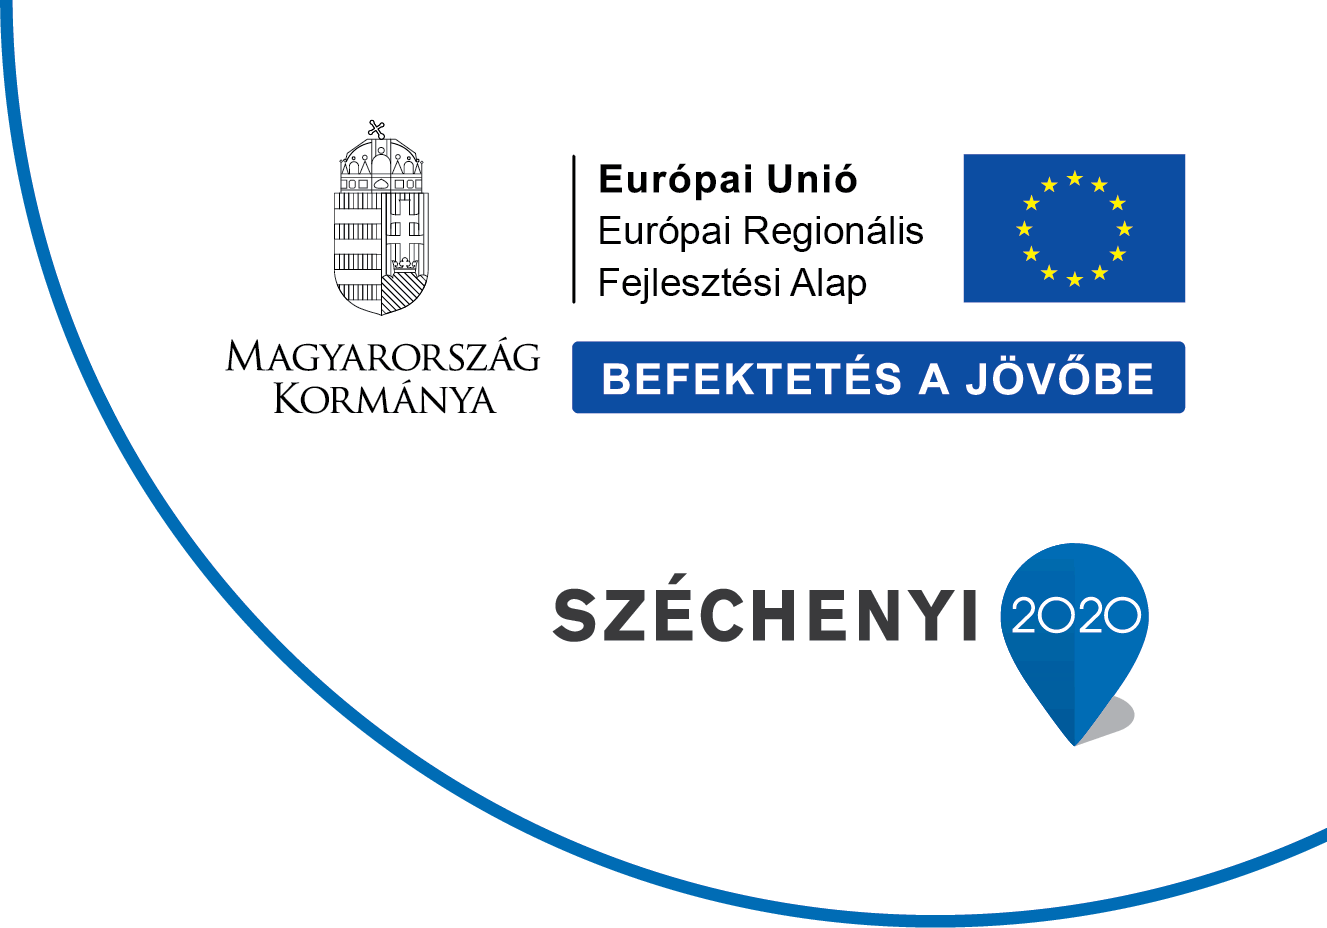 Szchenyi 2020 plyzat